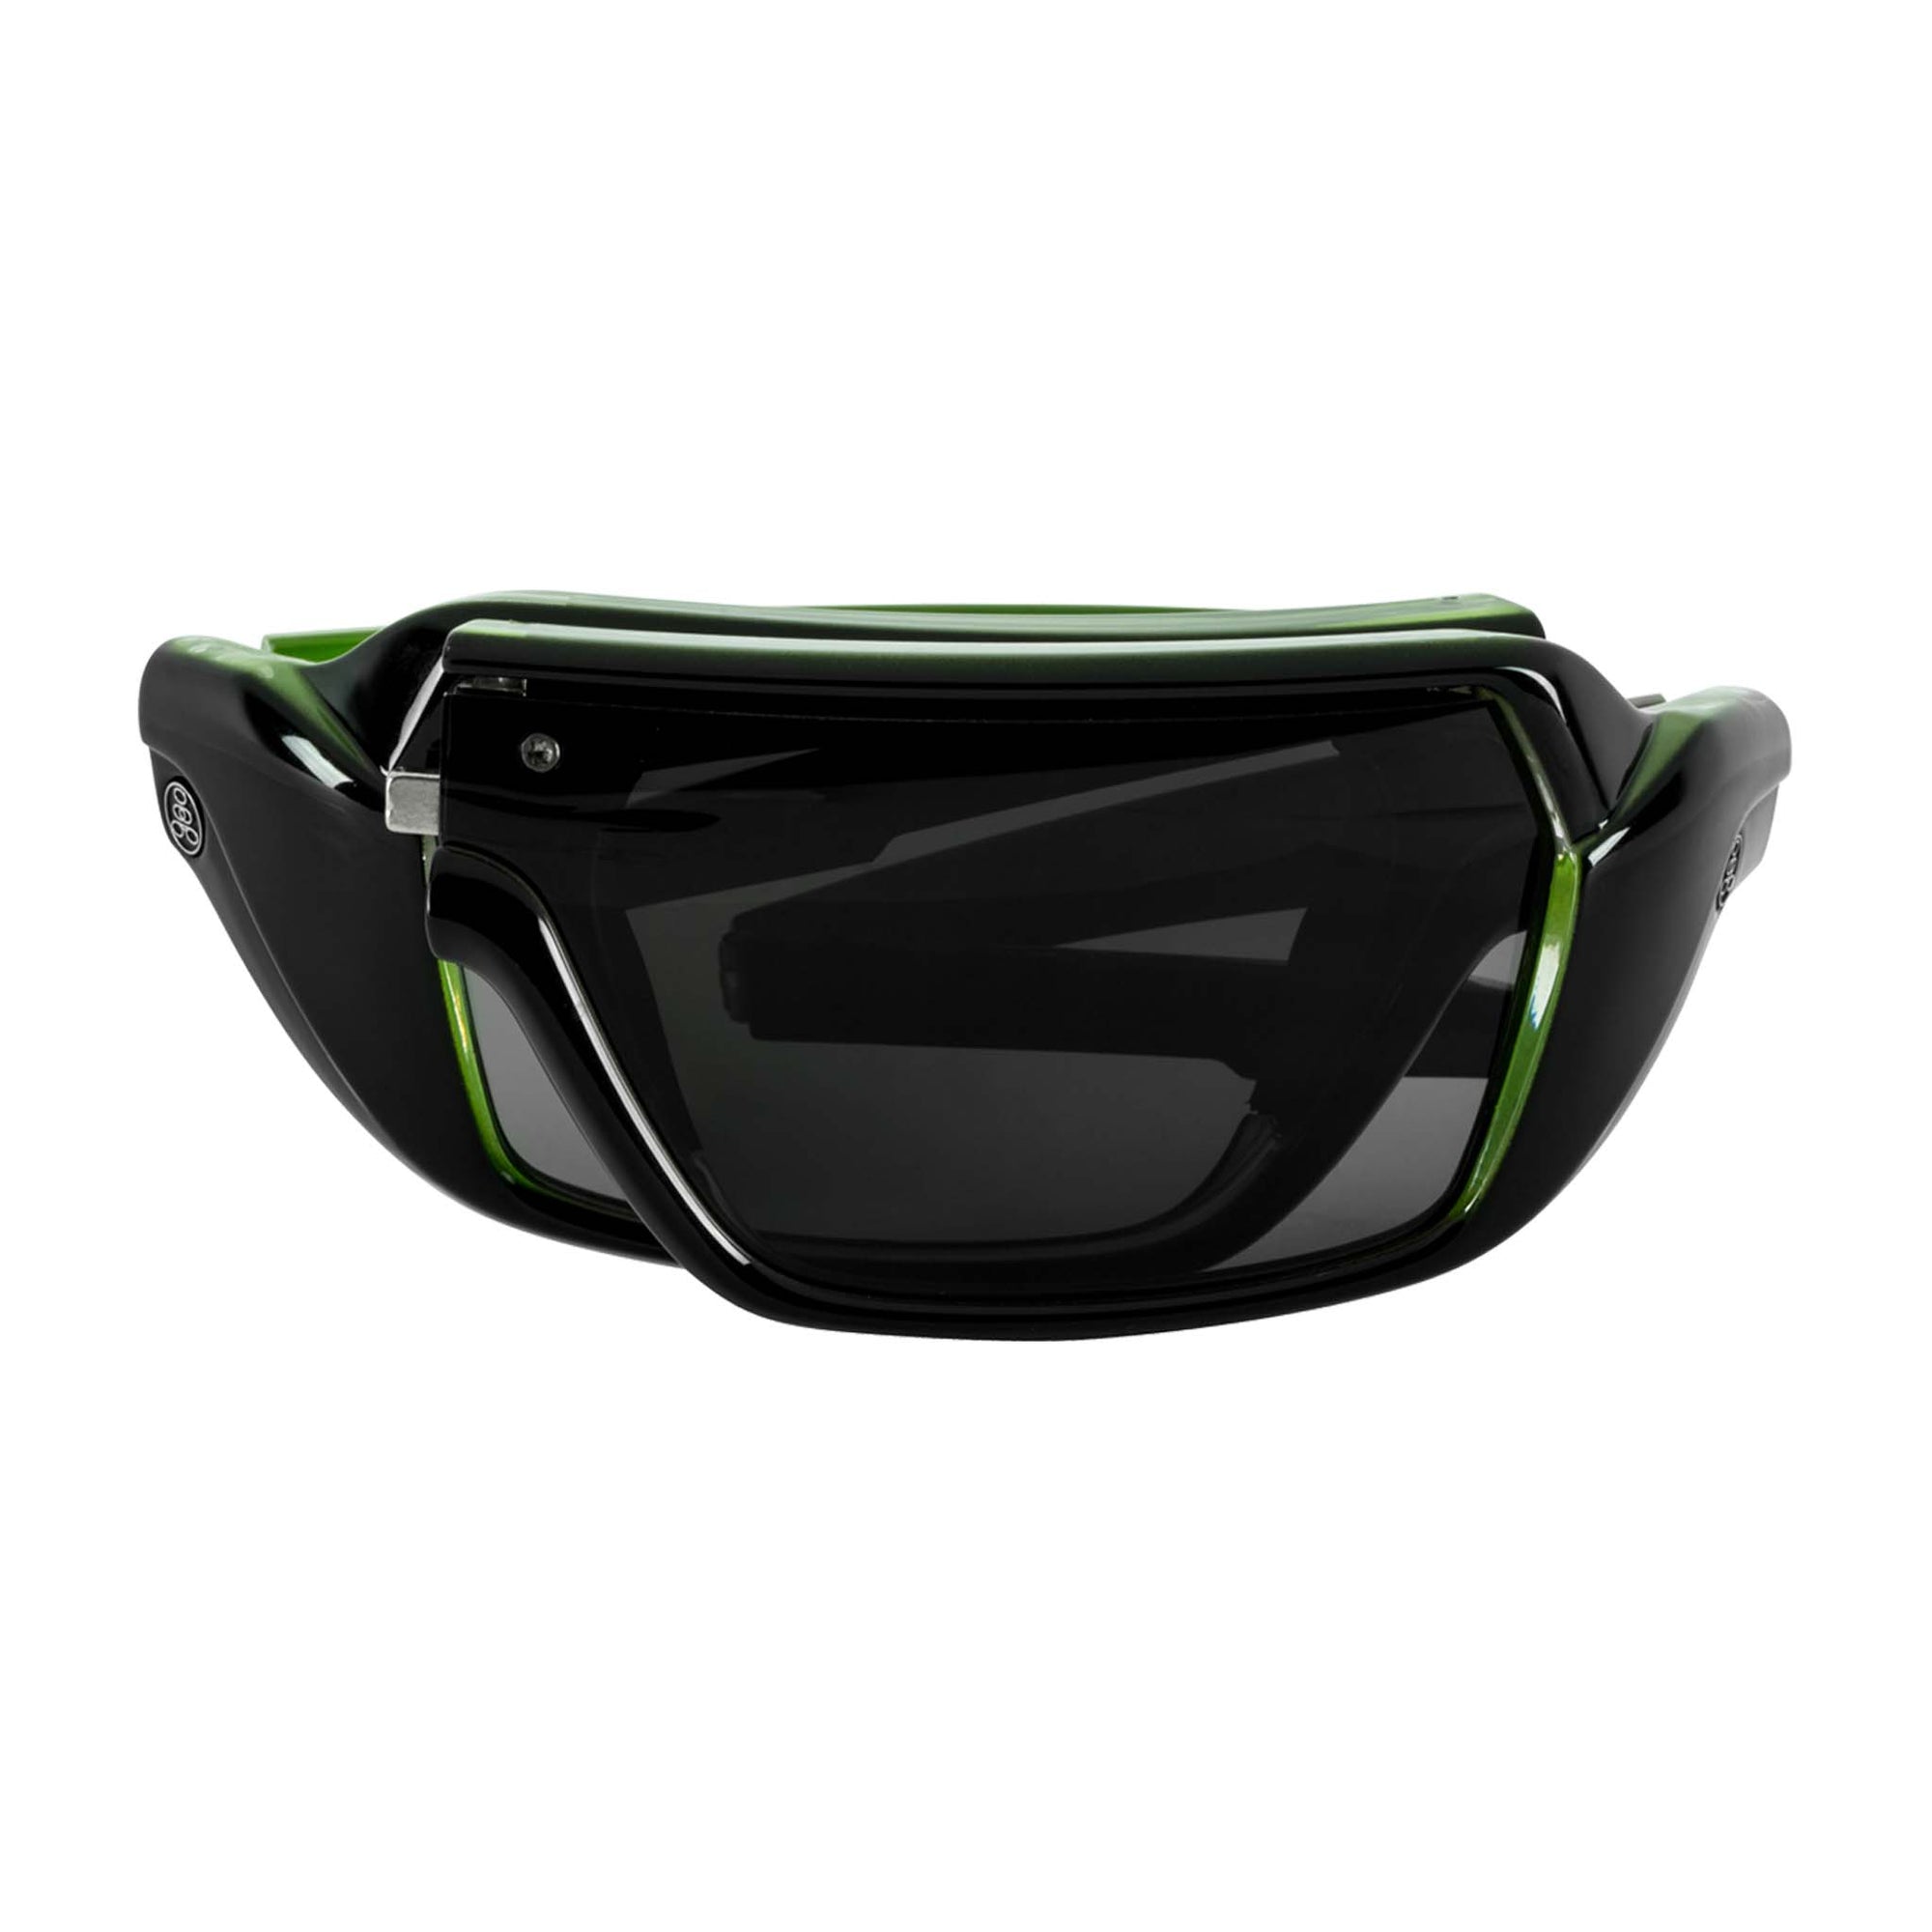 Popticals, Premium Compact Sunglasses, PopStorm, 010060-GLGP, Polarized Sunglasses, Gloss Black/Green Crystal Frame, Gray Lenses, Compact View